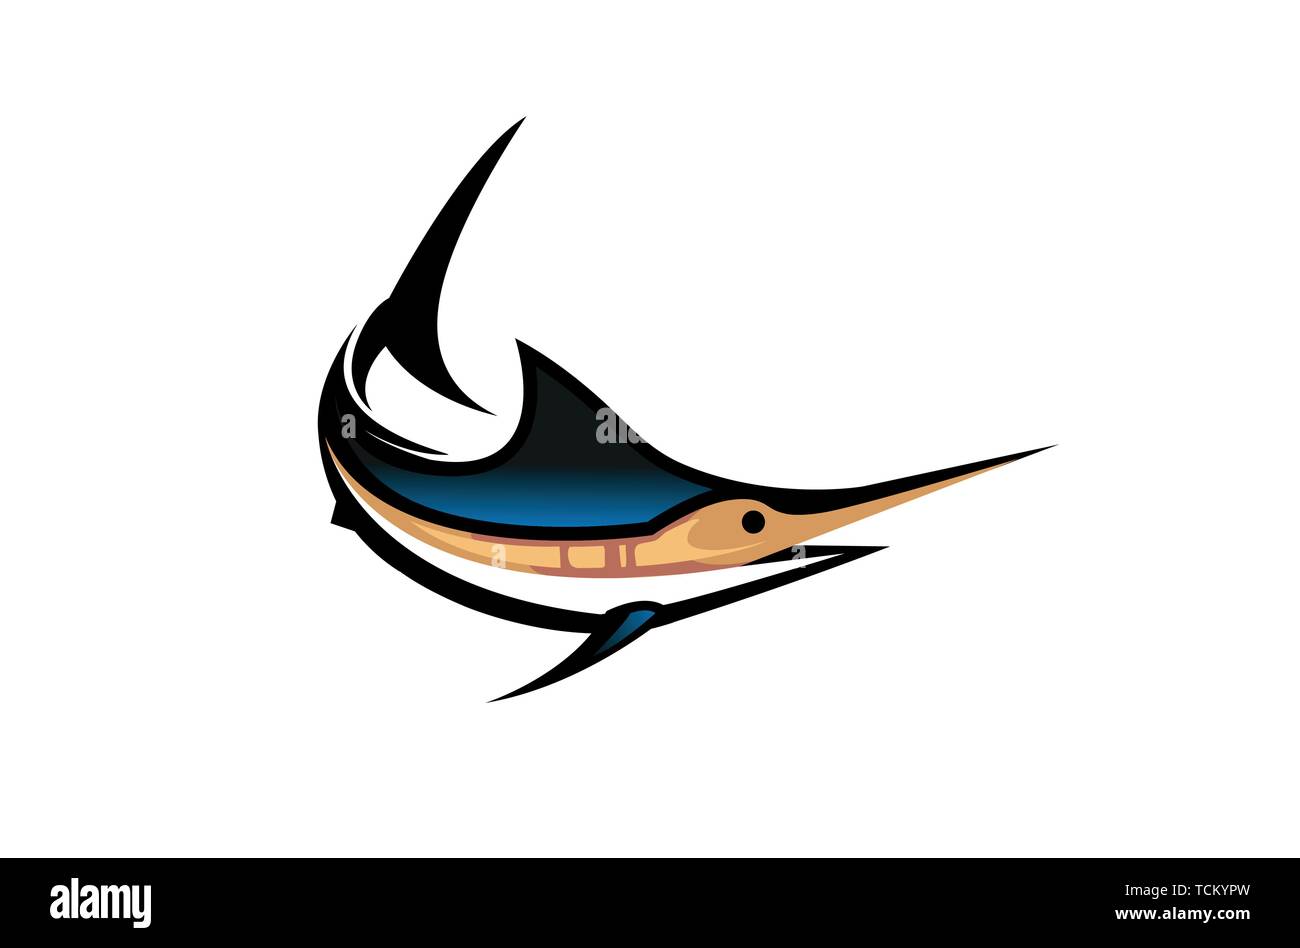 Creative Swordfish Marlin Aquatic Animal Logo Illustration Stock Vector